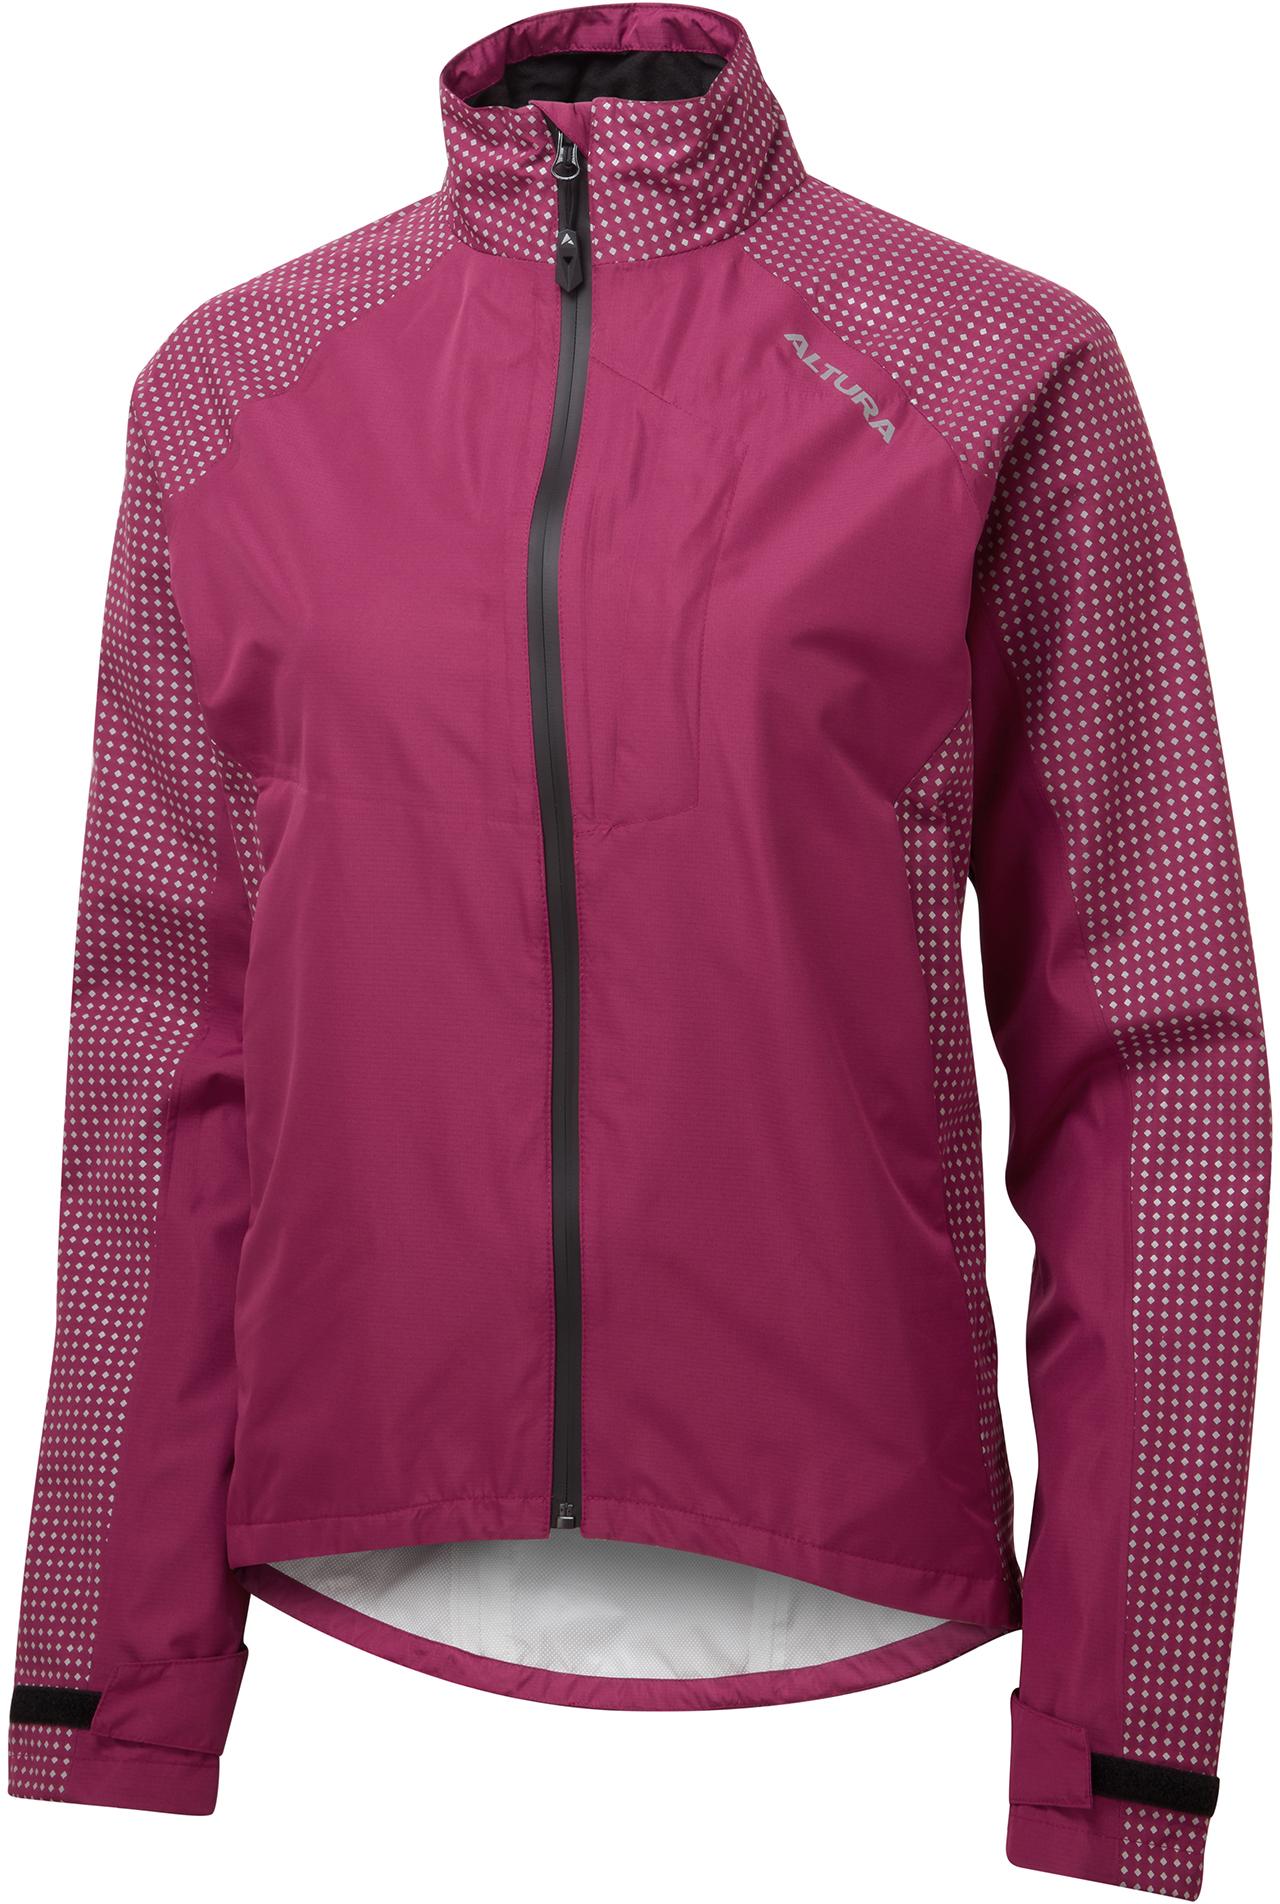 Altura Nightvision Storm Women's Waterproof Jacket Pink 12